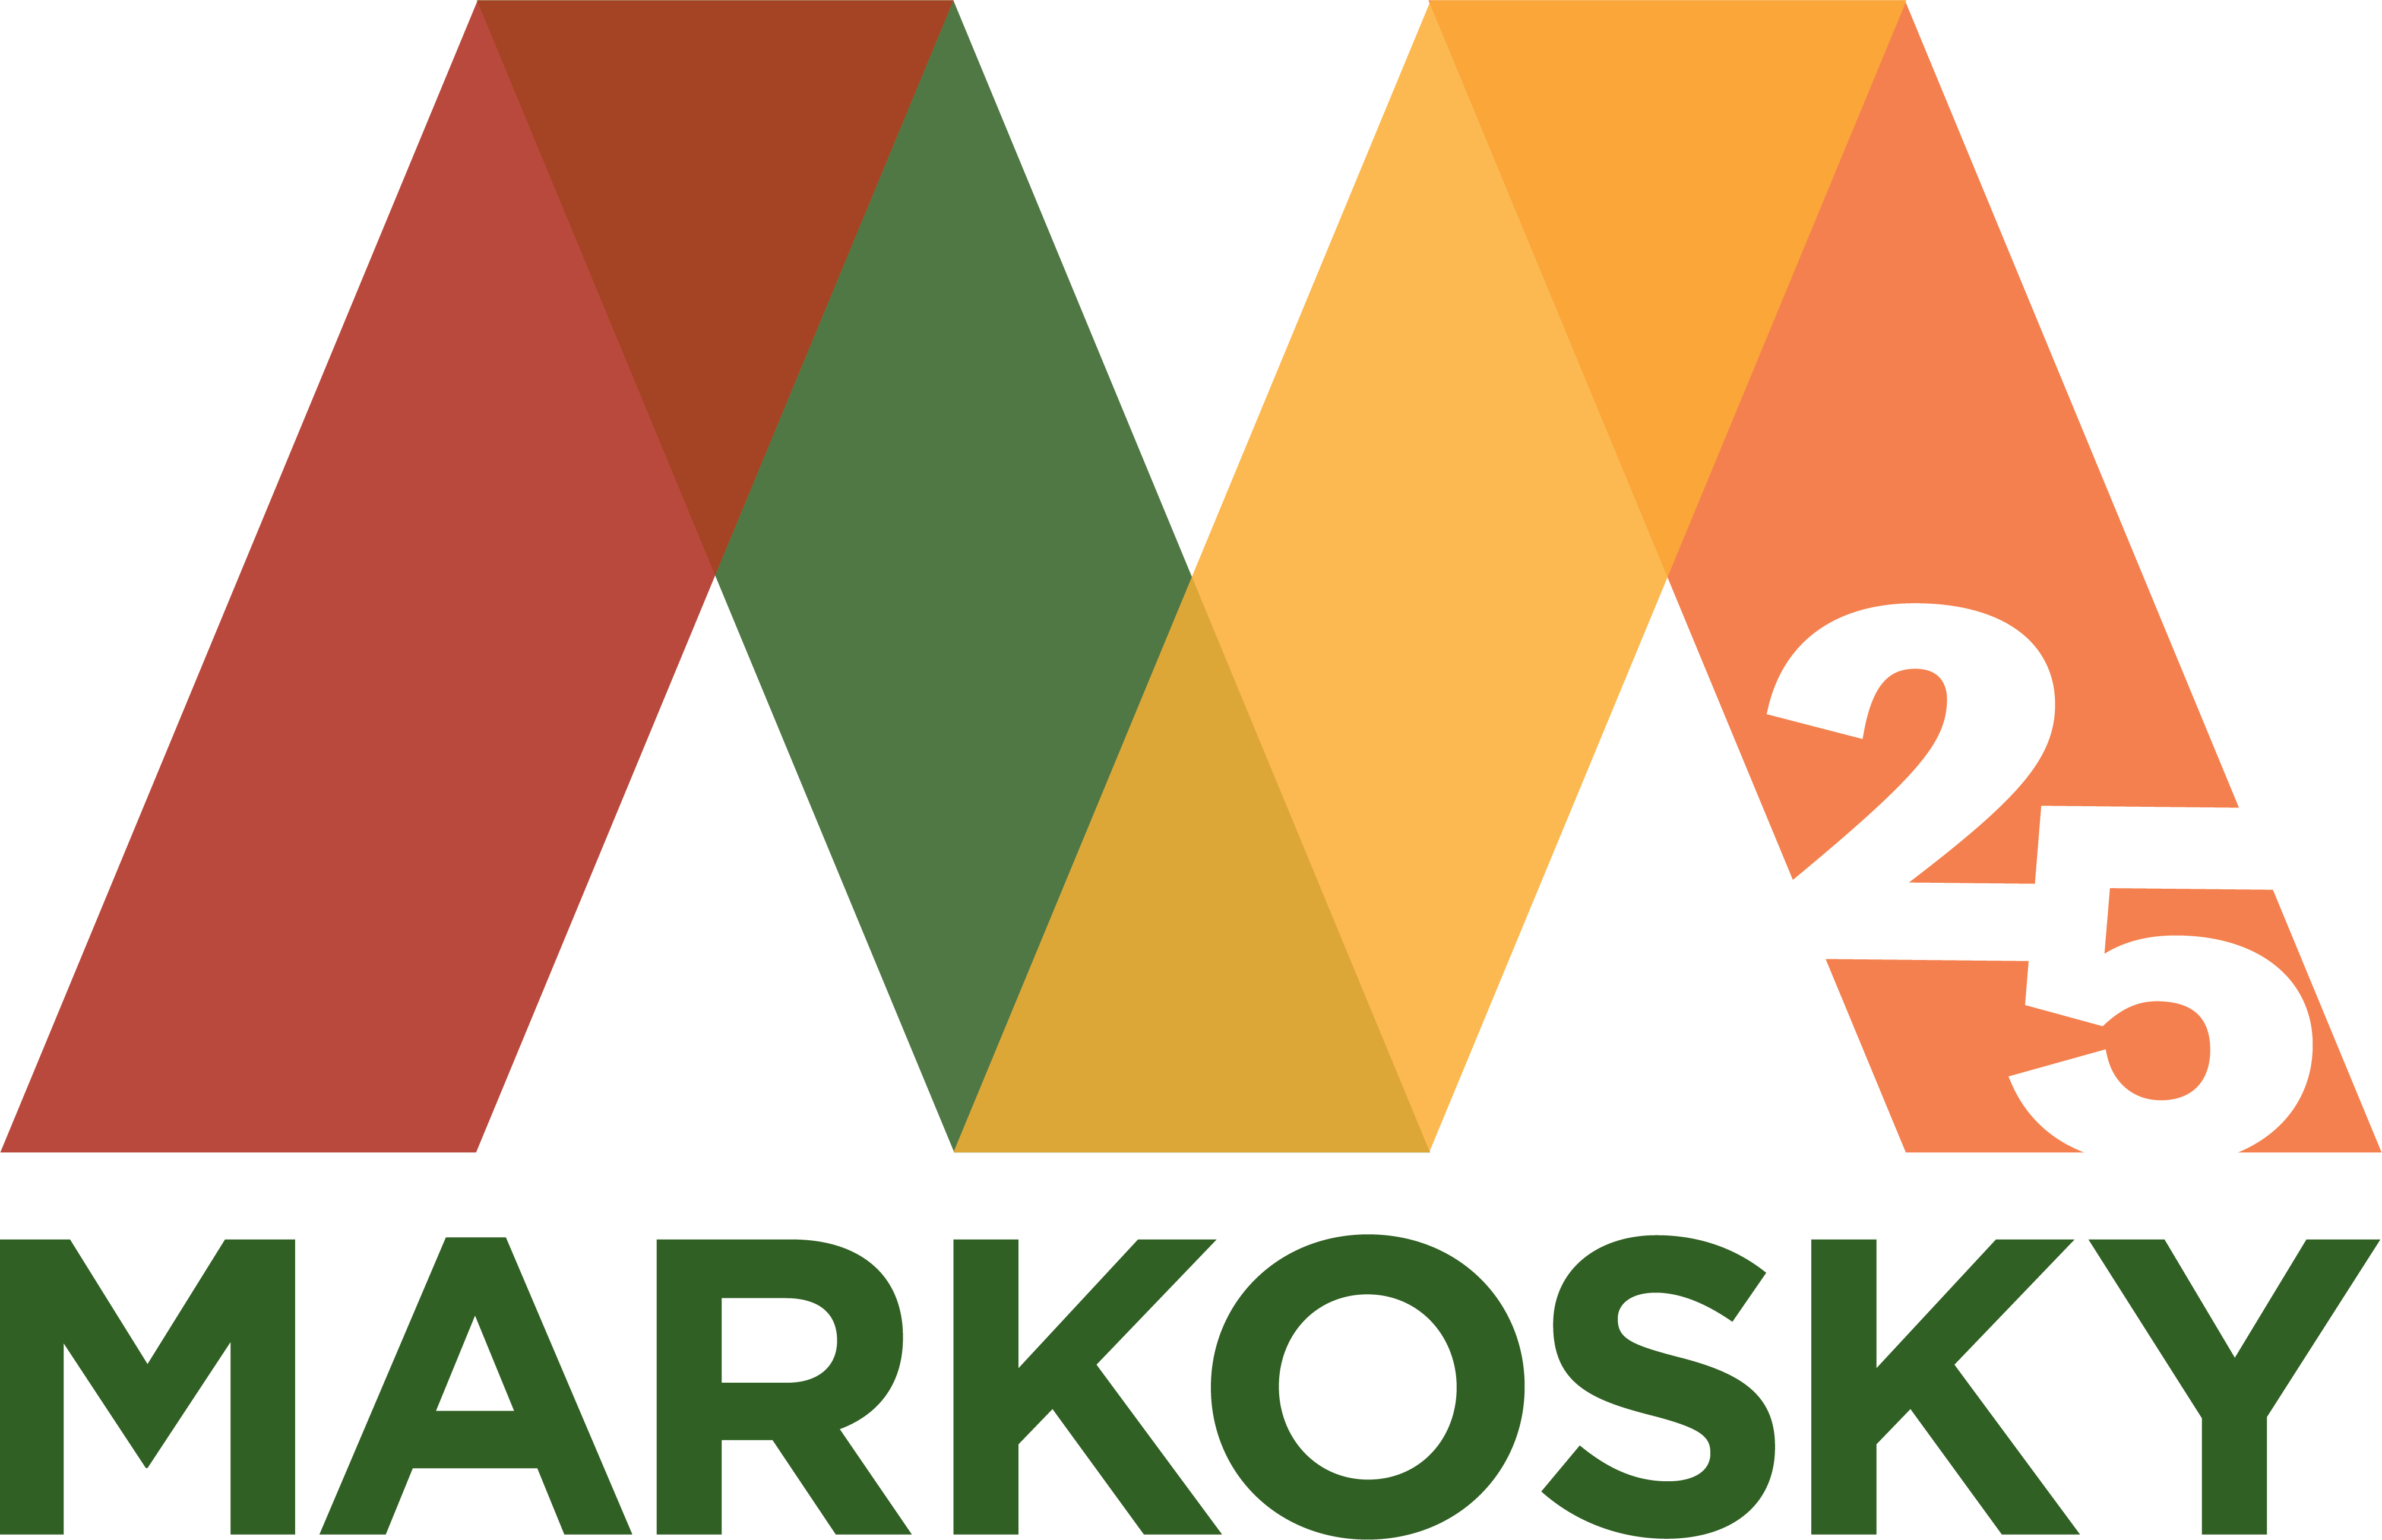 Markosky Engineering Group, Inc.